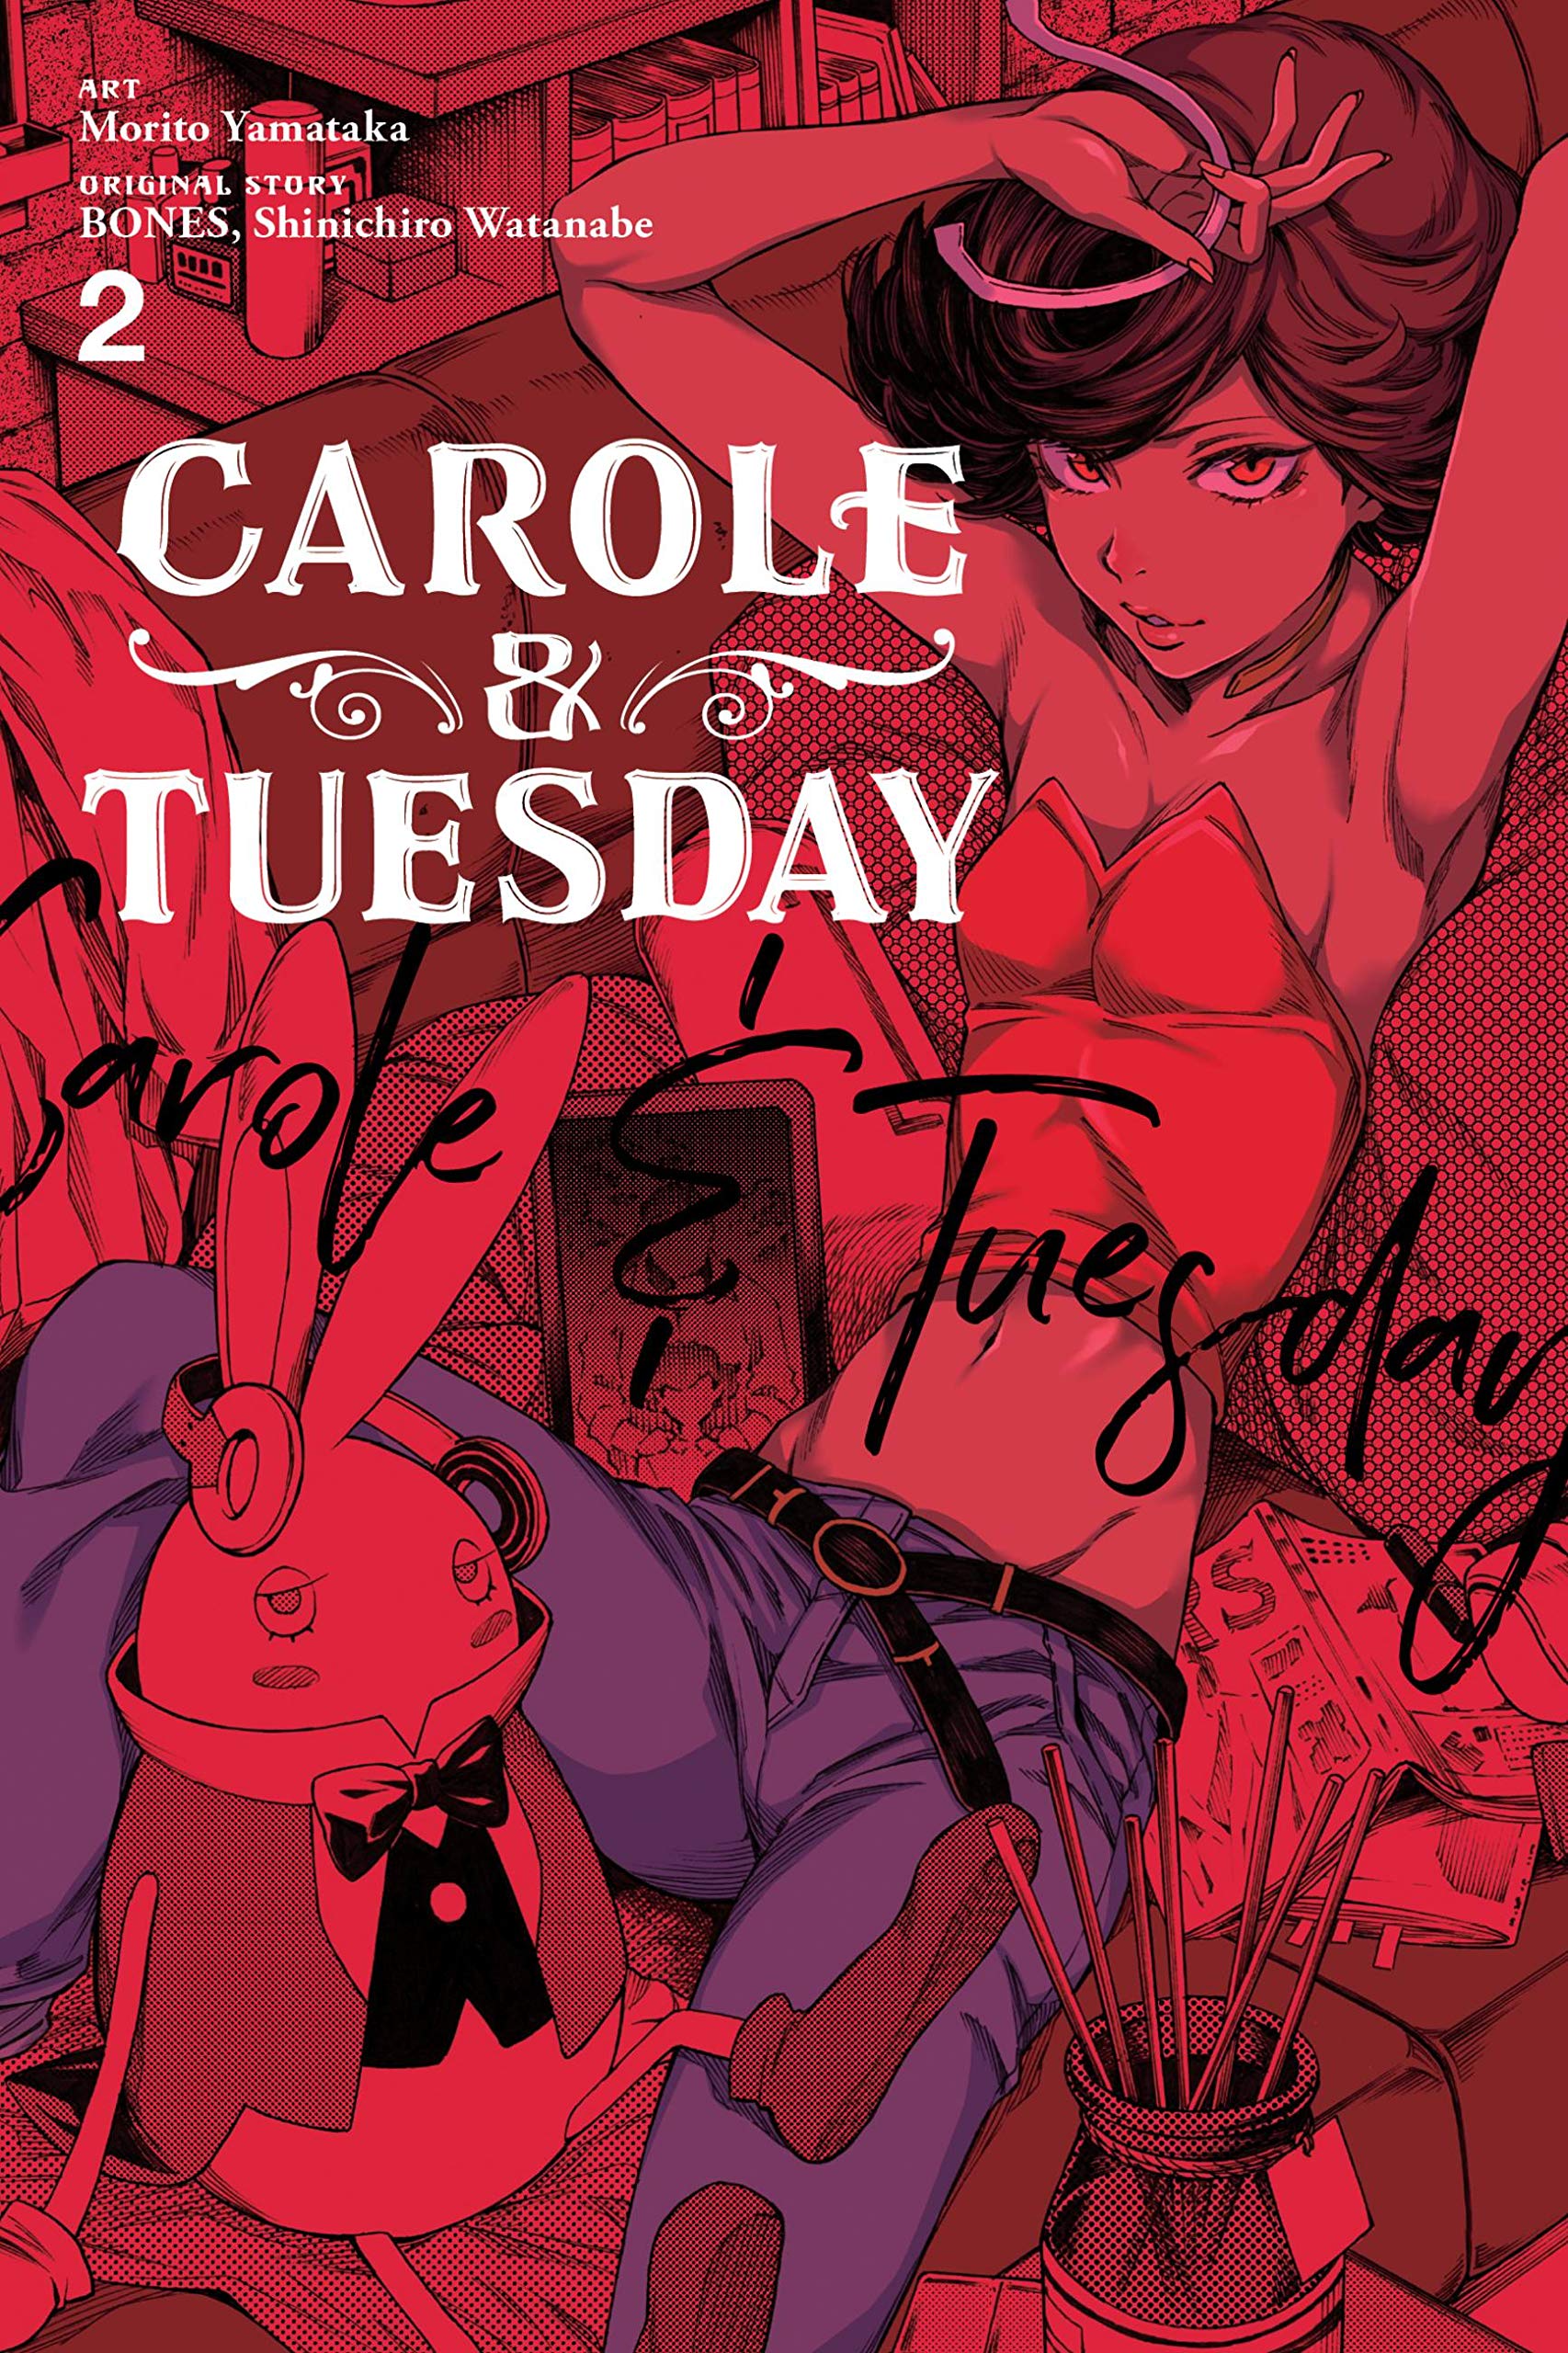 Carole & Tuesday. Volume 2 | Bones, Shinichiro Watanabe image0